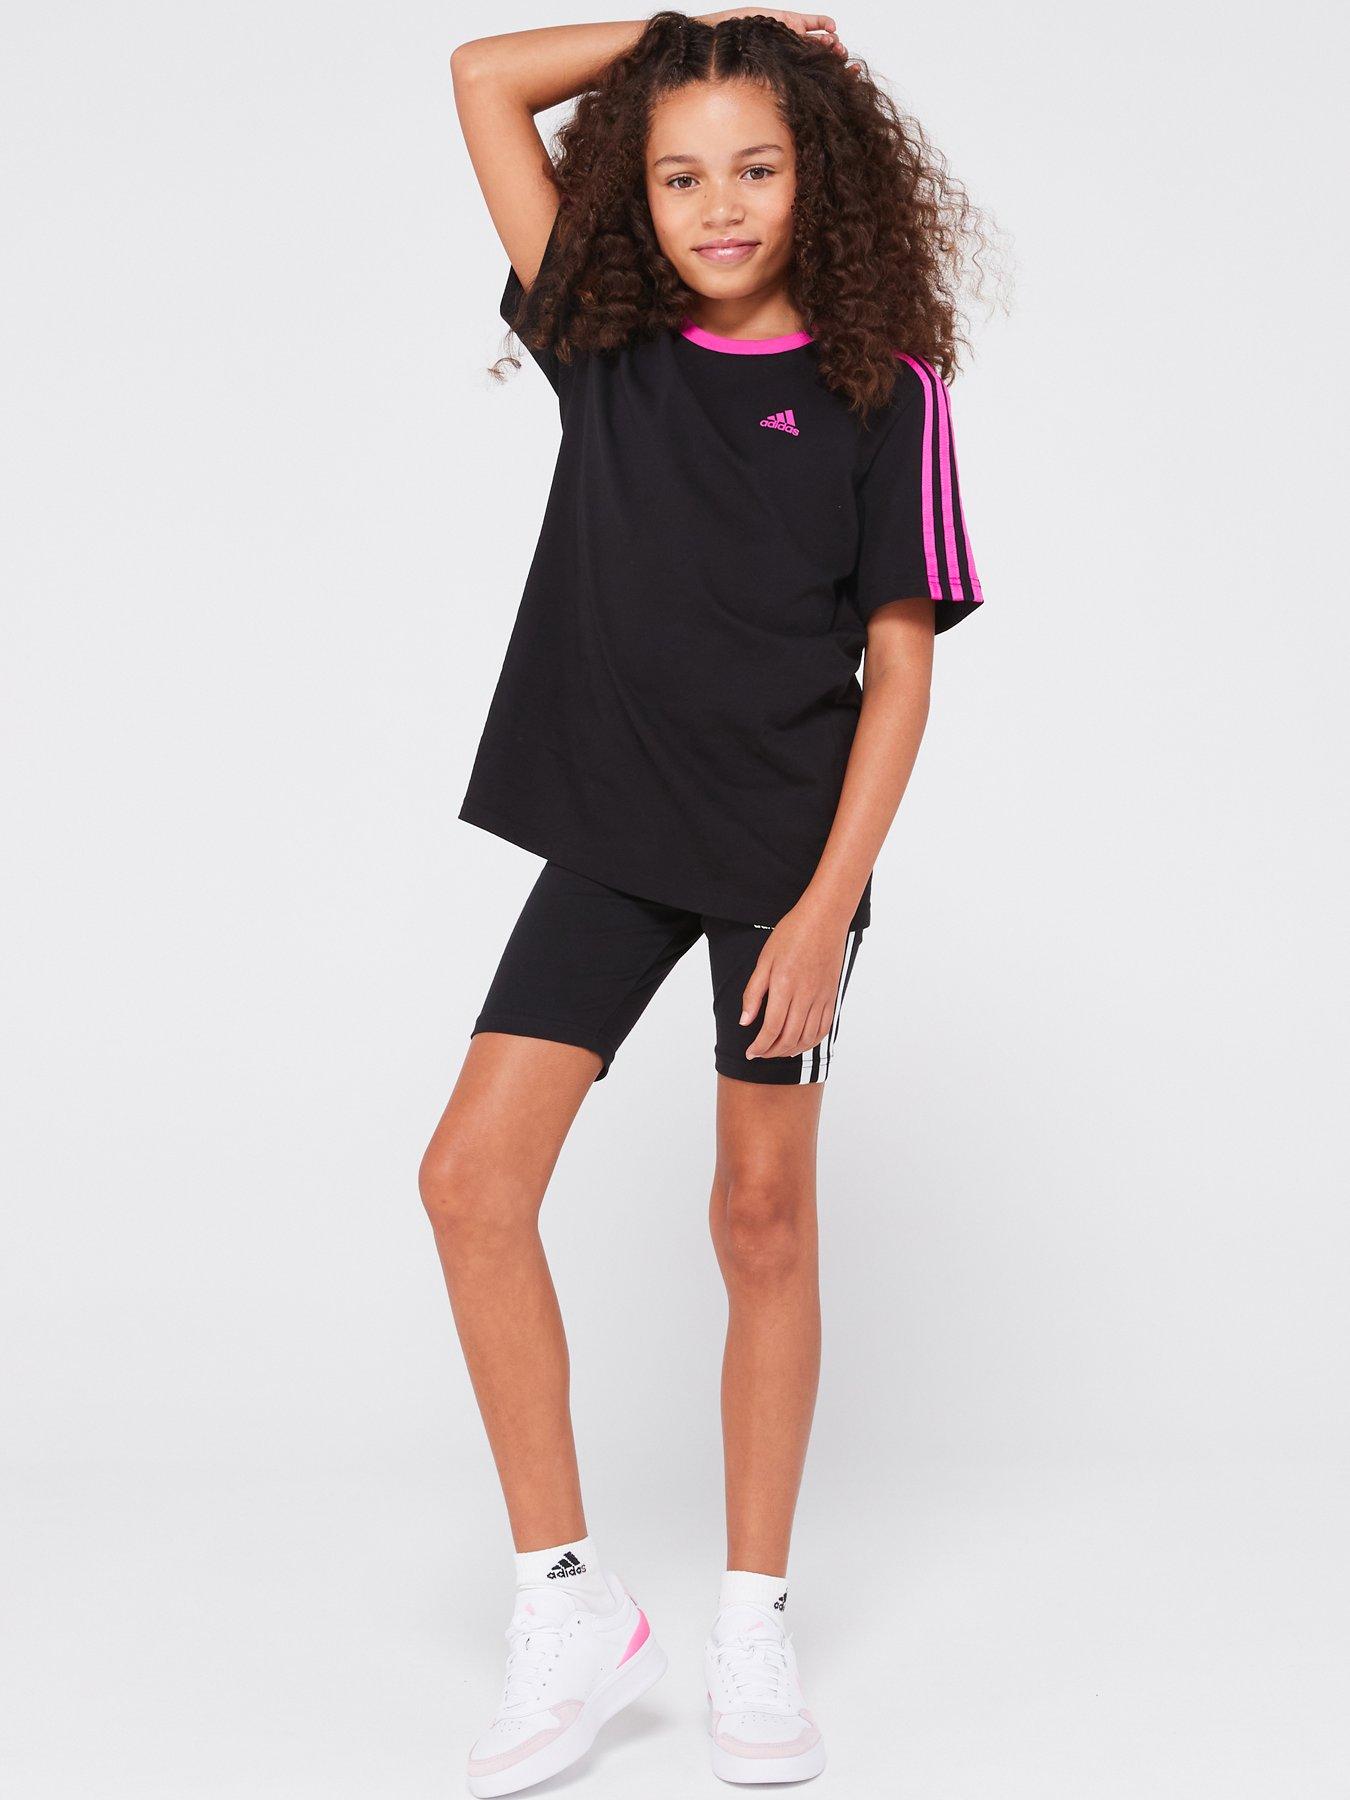 Nike Kids Girls Swoosh Tights - Black